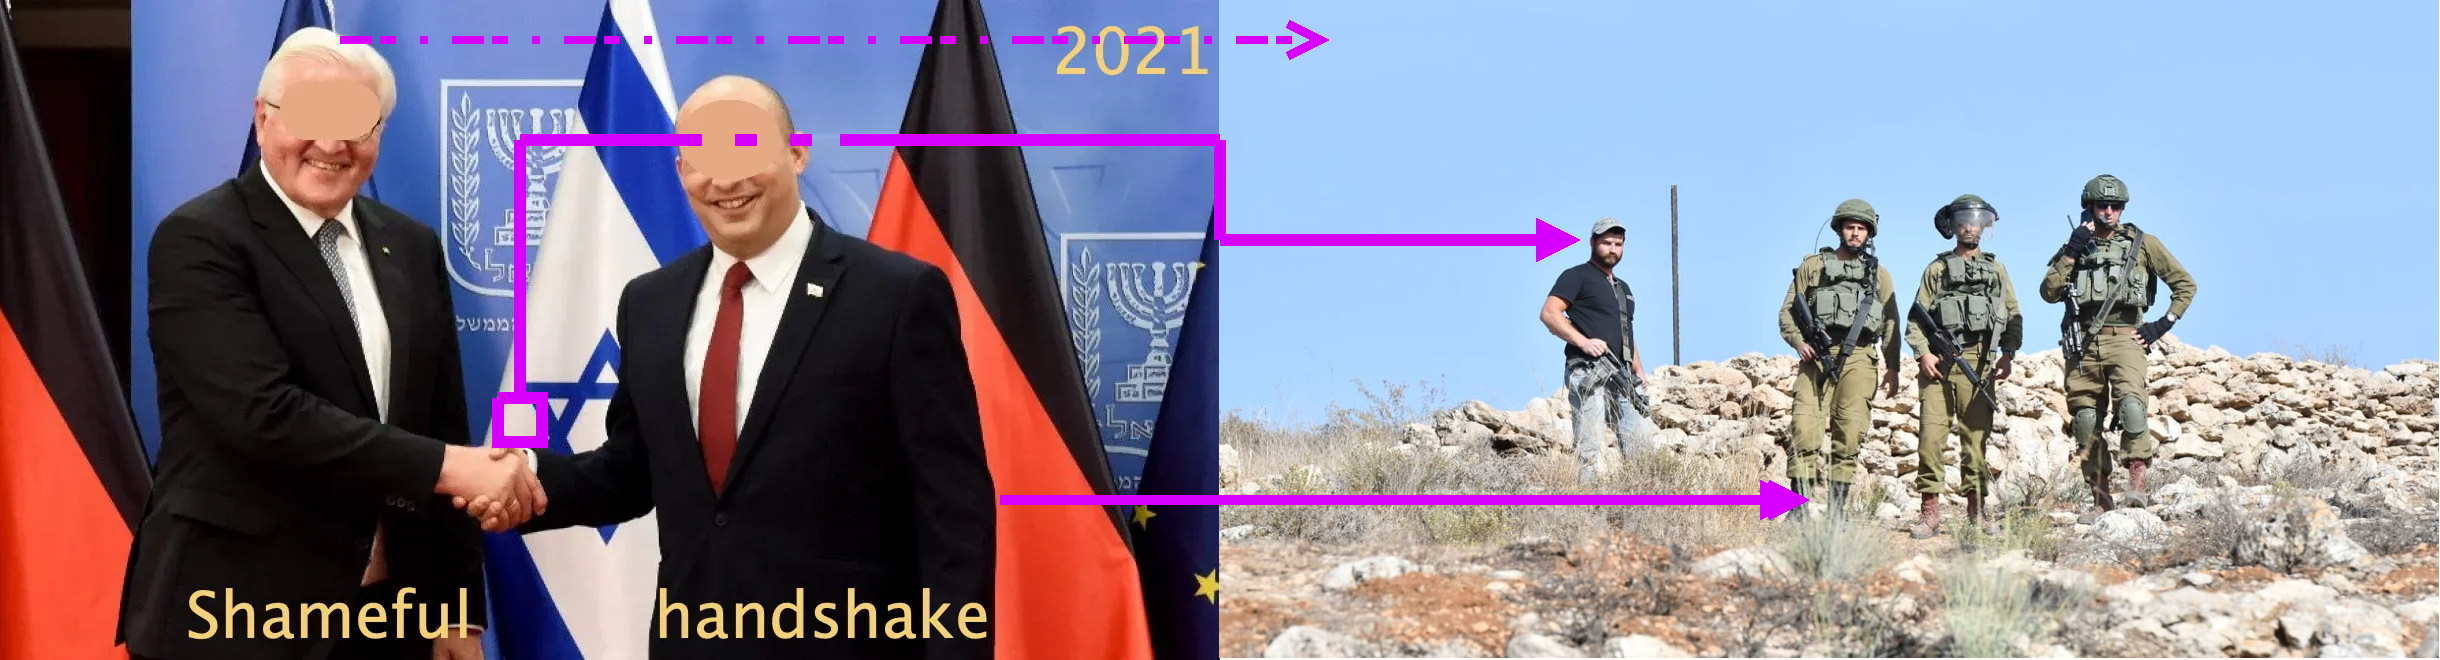 germany-israel-2021